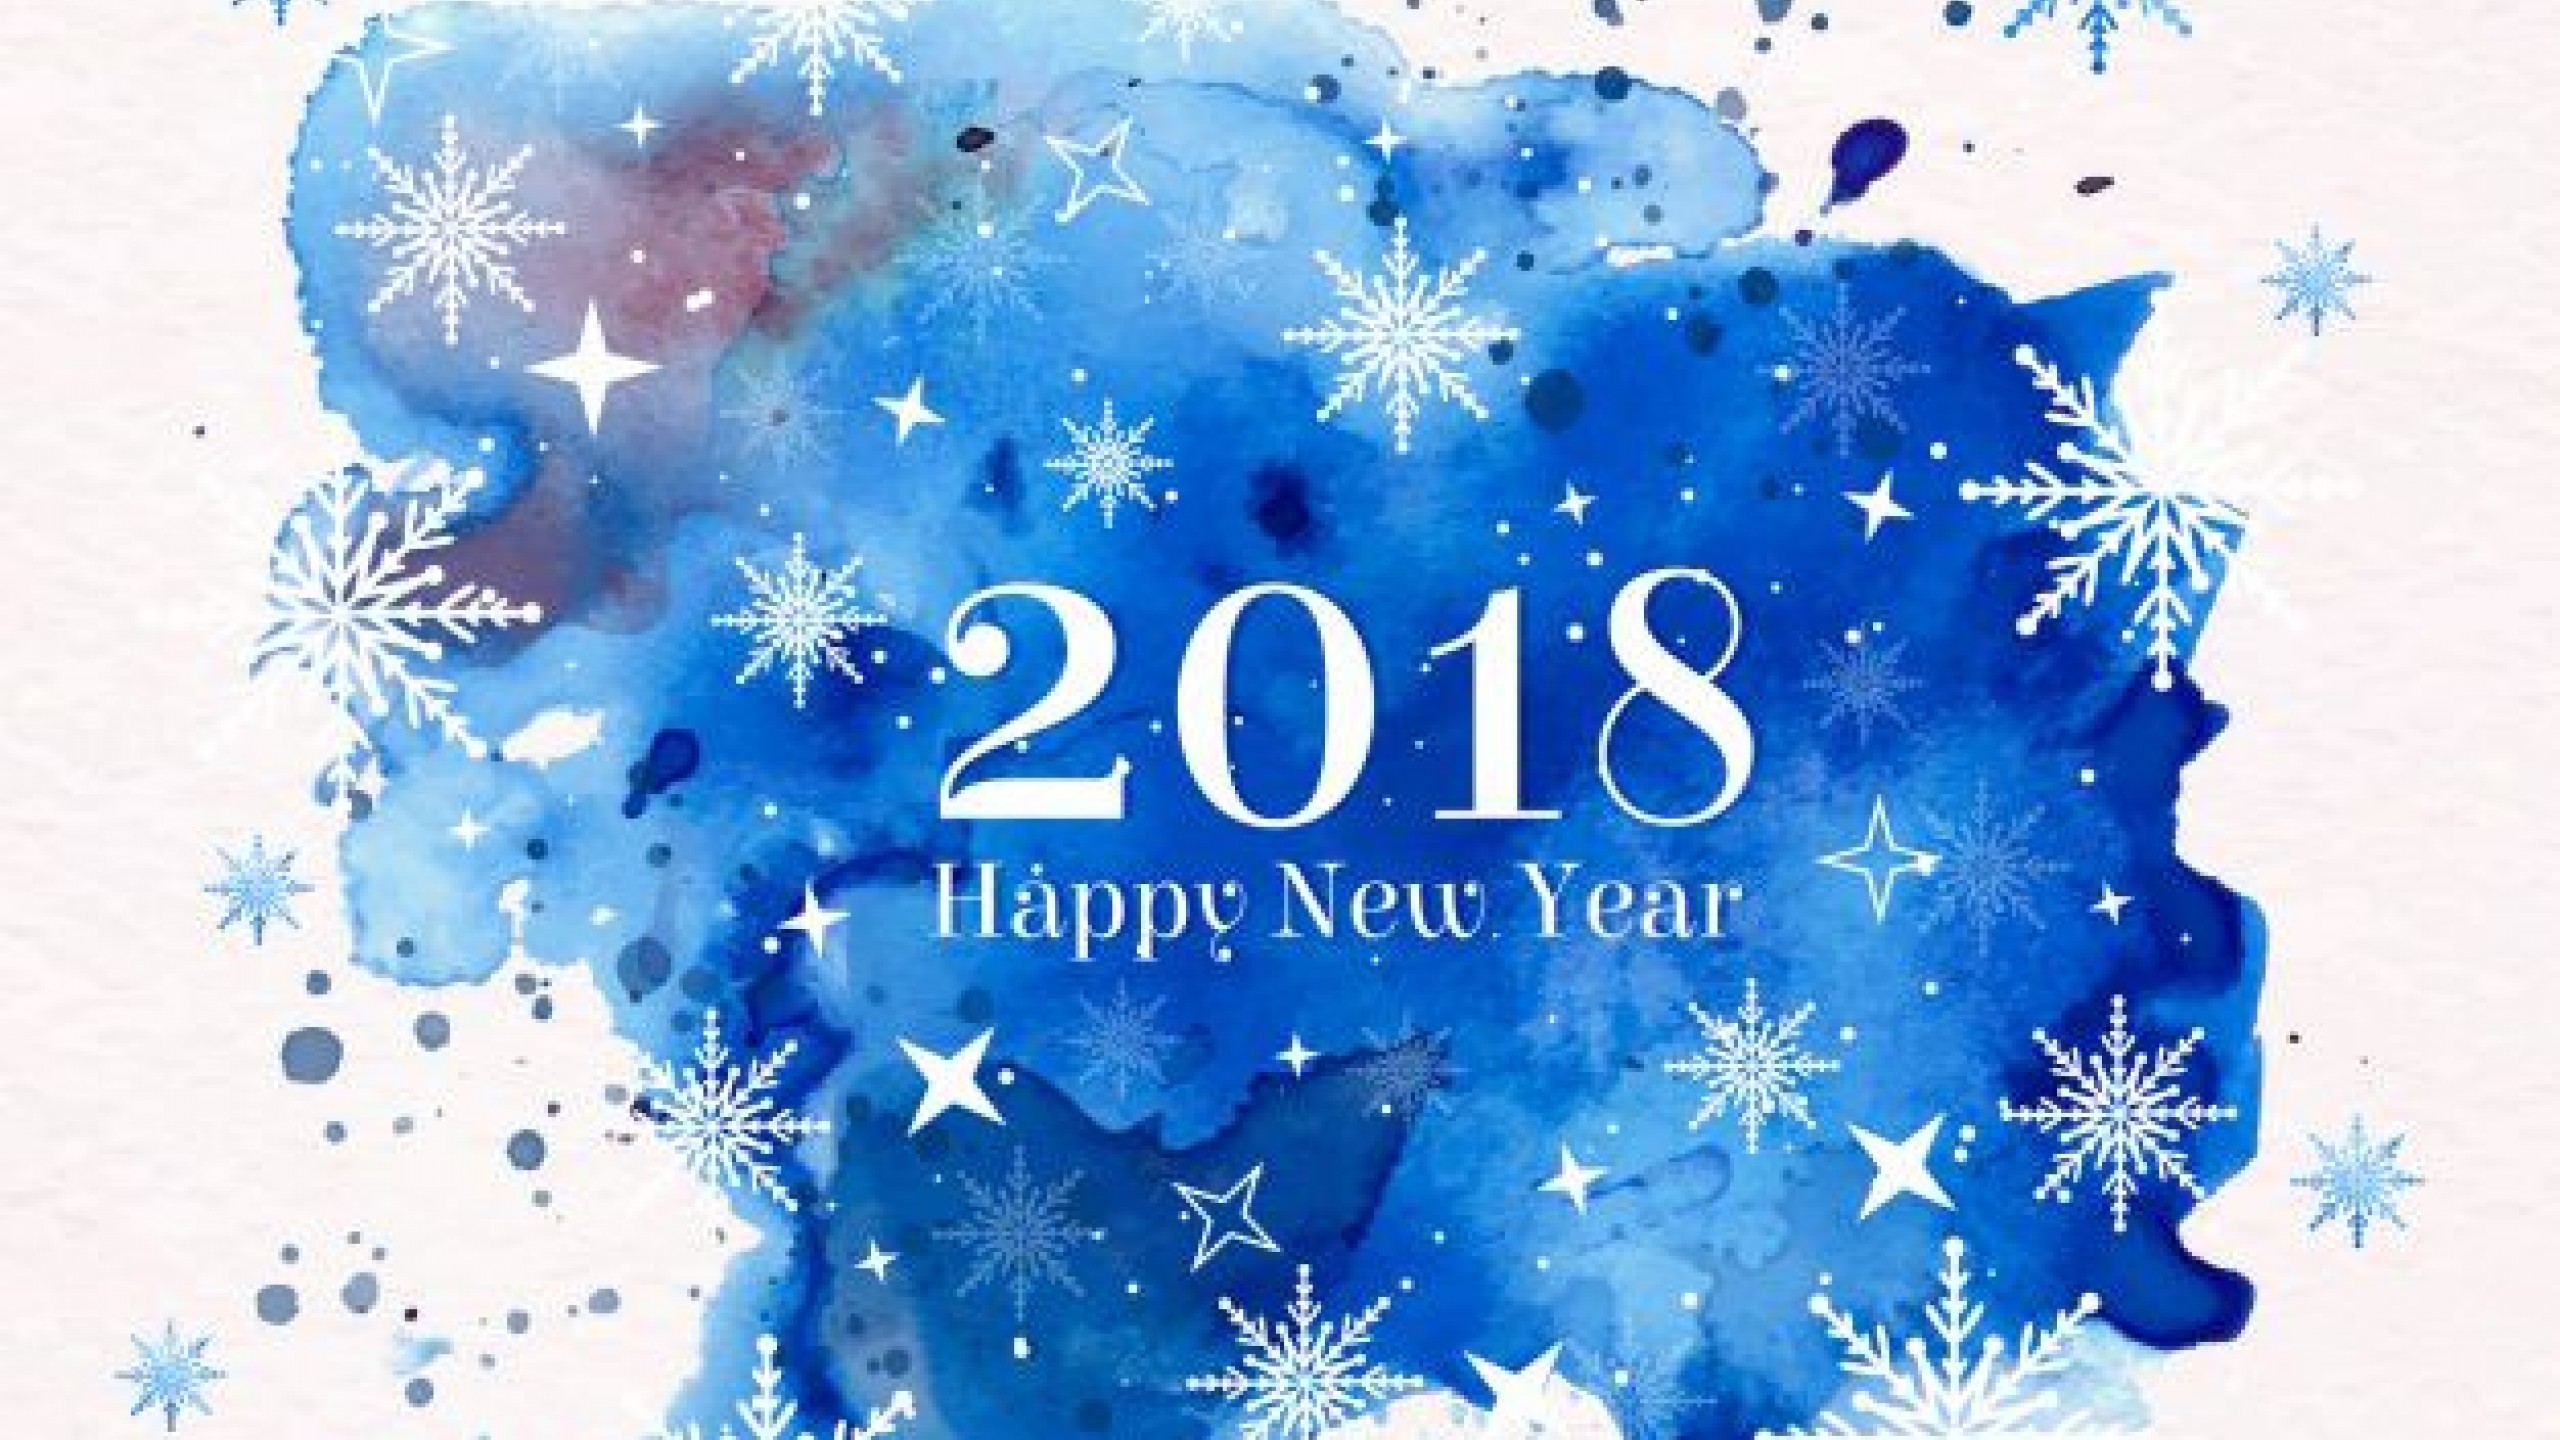 2560x1440 Happy New Year 2018 Background Hd. ultra hd 4k resolutions